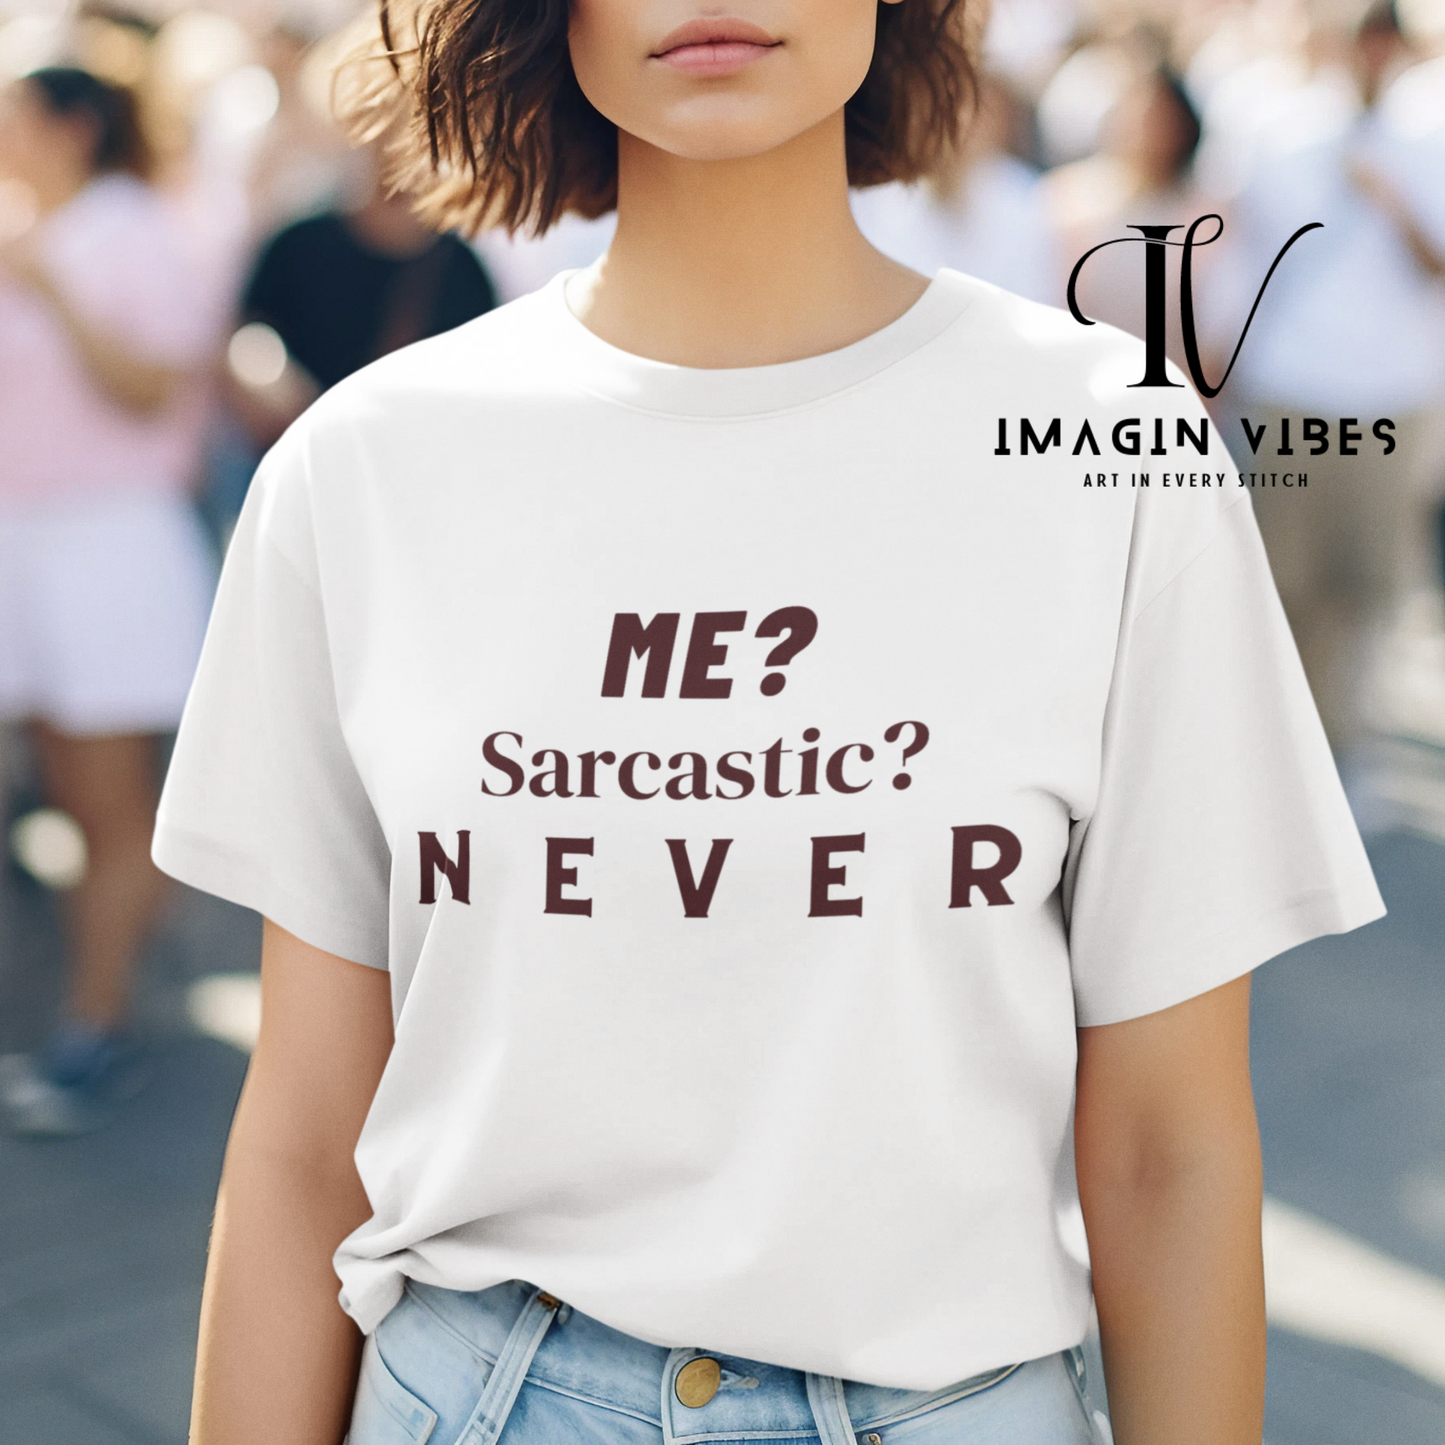 Me? Sarcastic? Never T-Shirt - Unisex Tee - Funny Sarcastic Shirt T-Shirt   